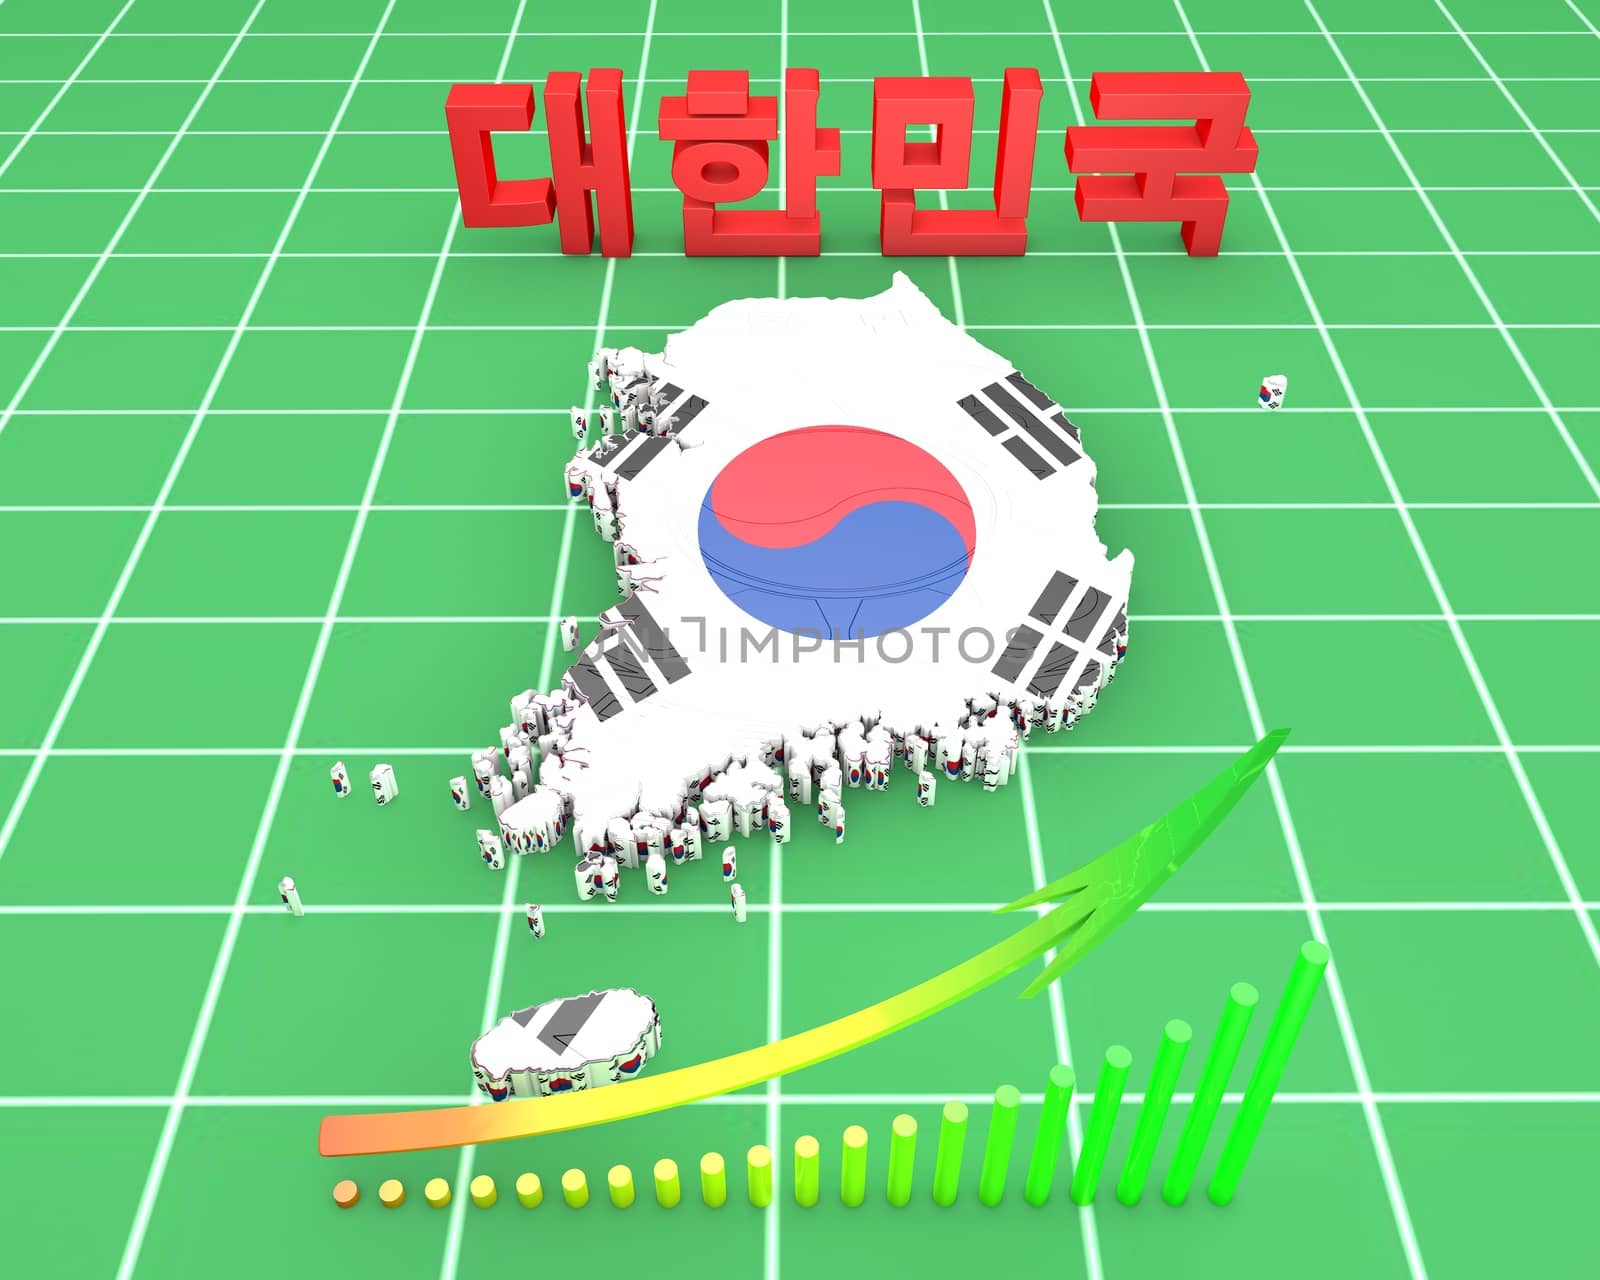 Map illustration of South Korea by dolfinvik